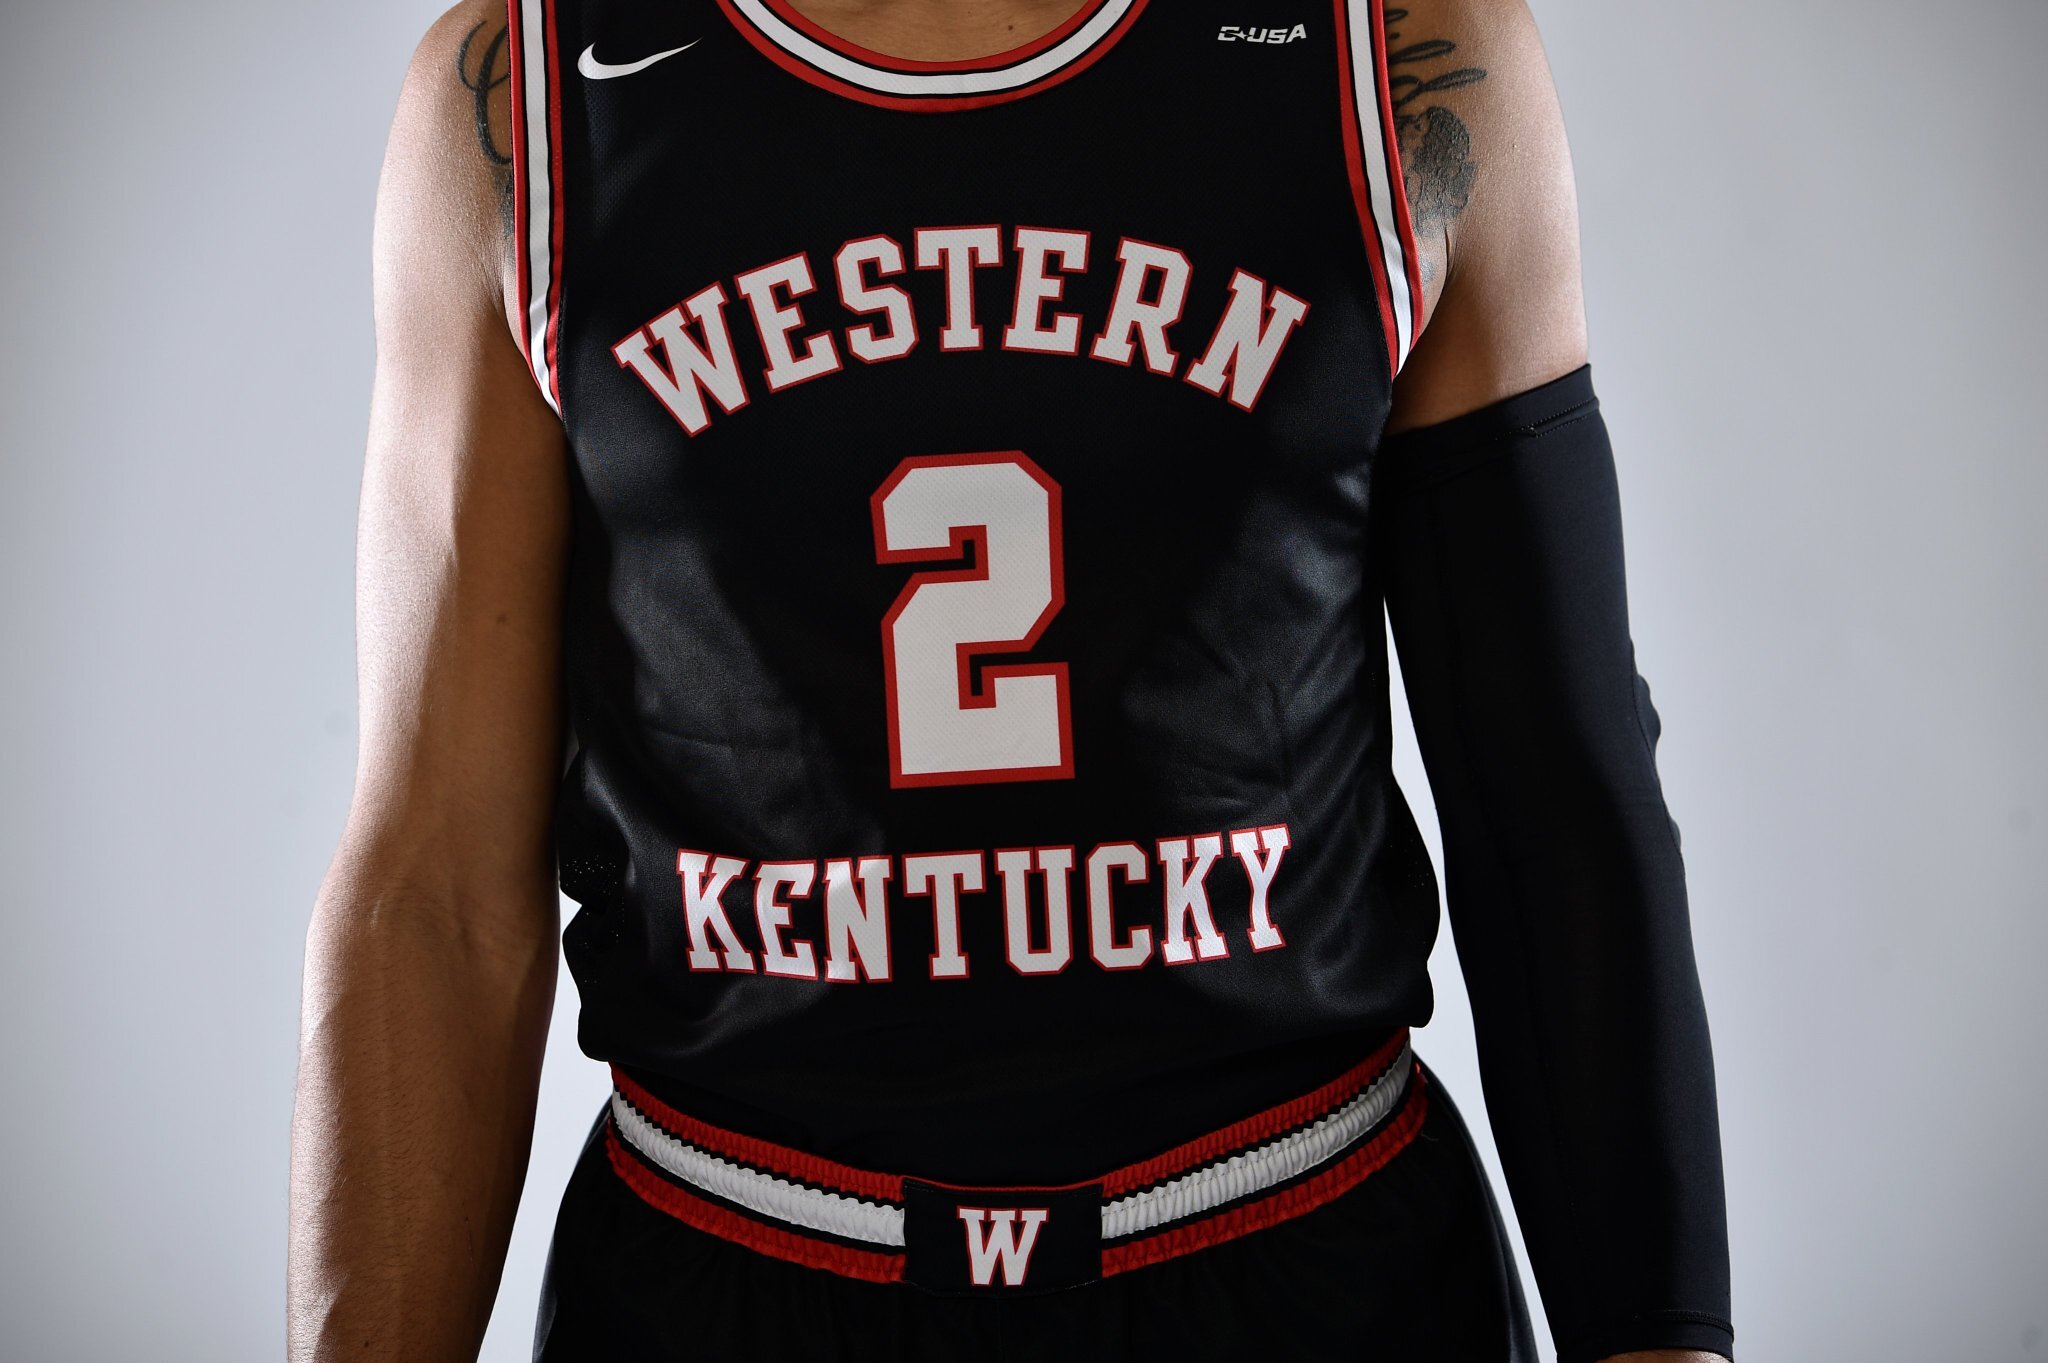 Blackout Uniform for Western Kentucky 